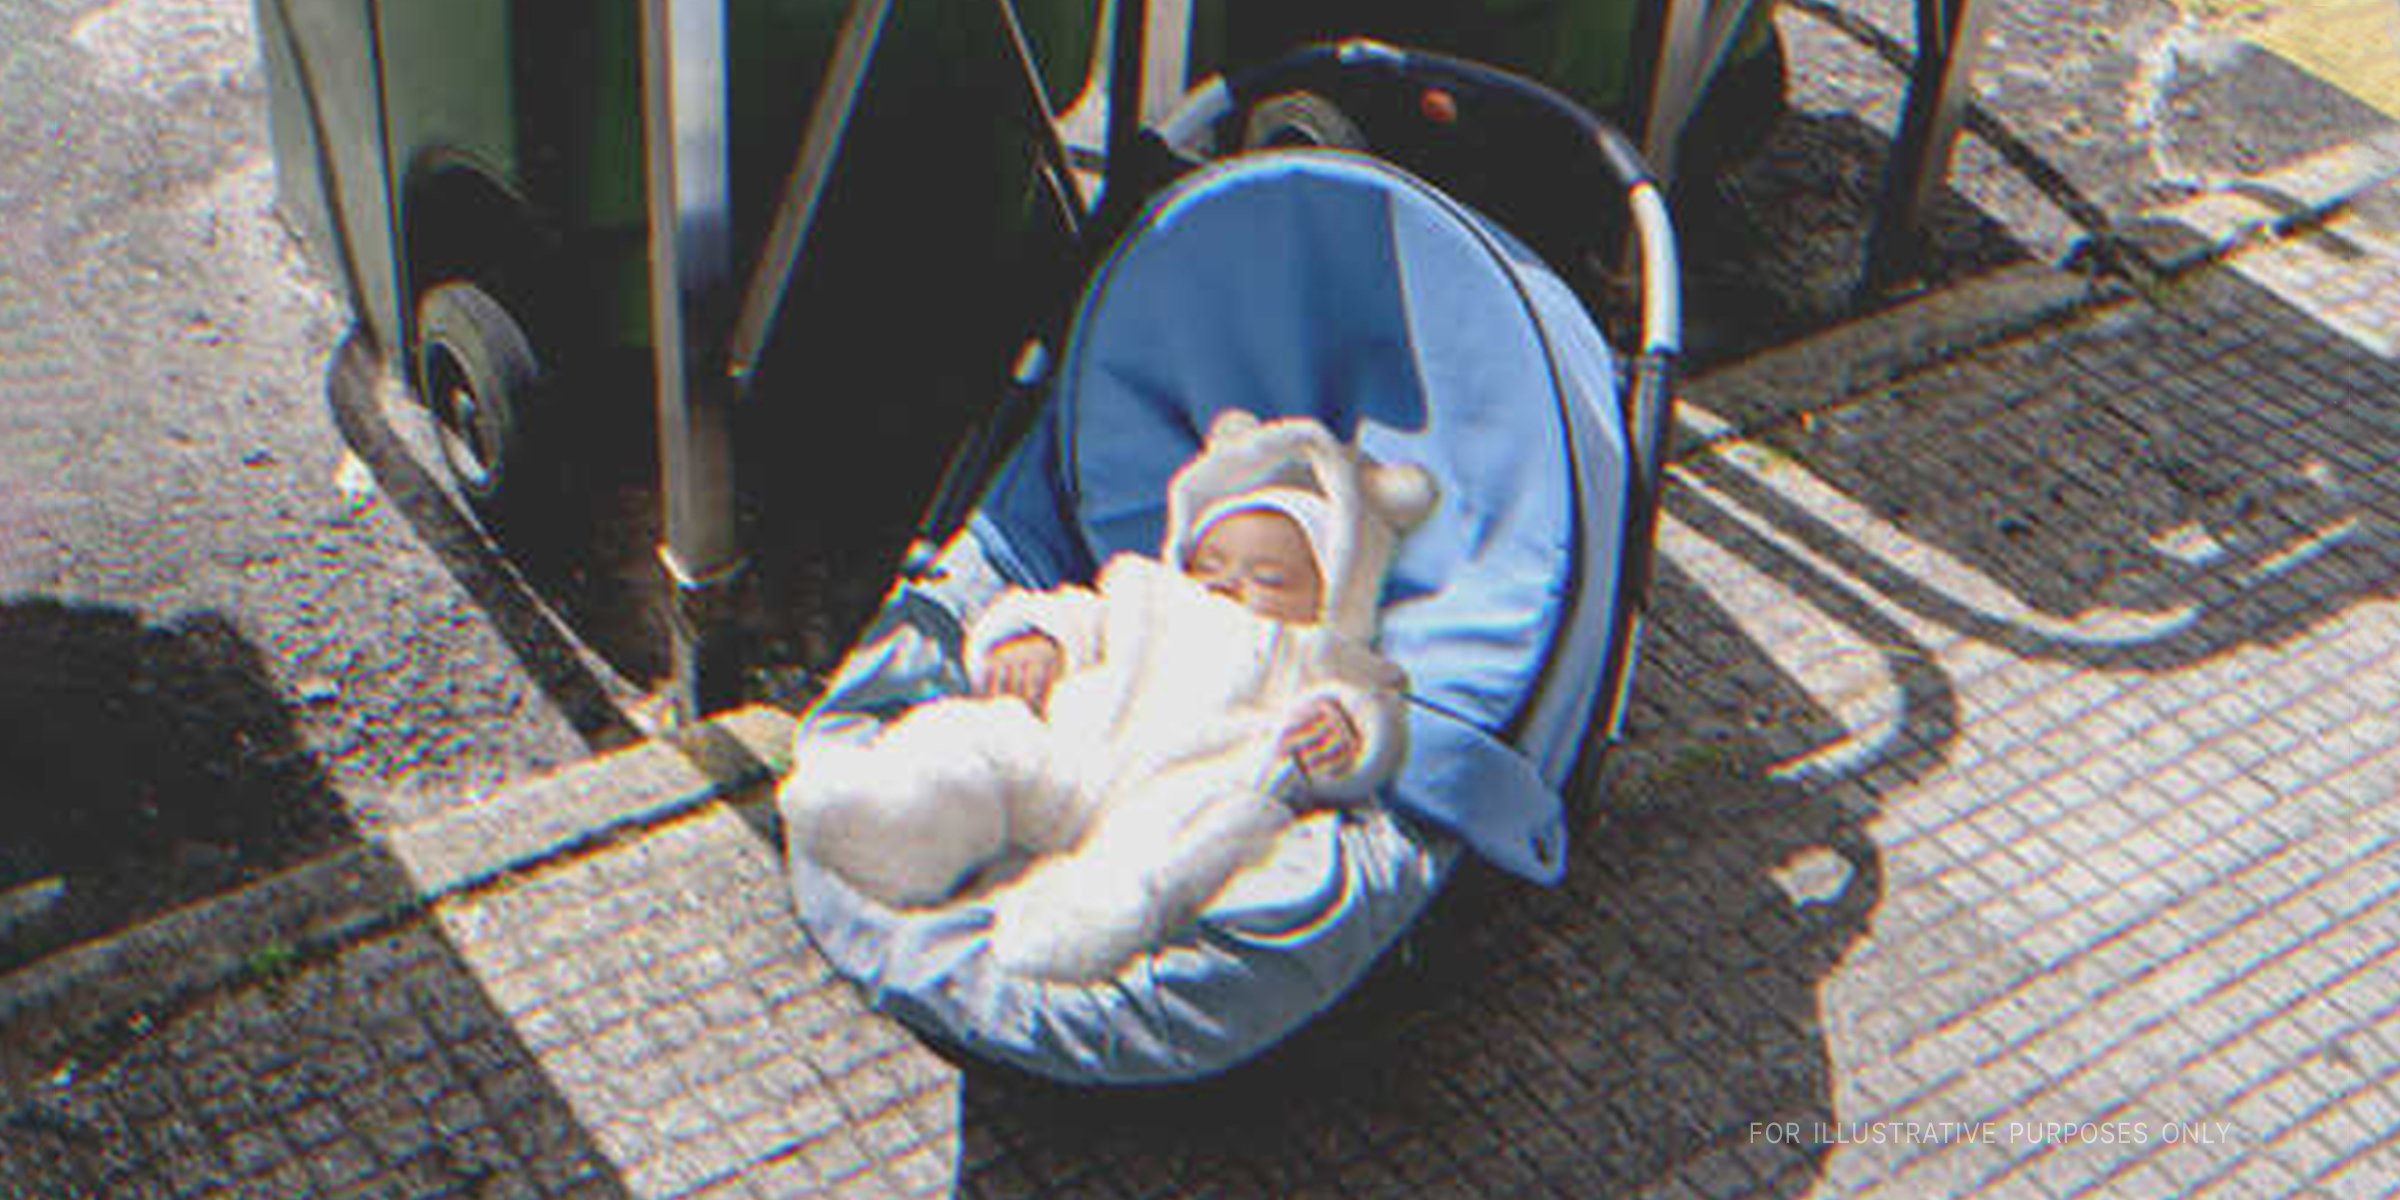 Baby in a car seat near a dumpster | Source: Shutterstock